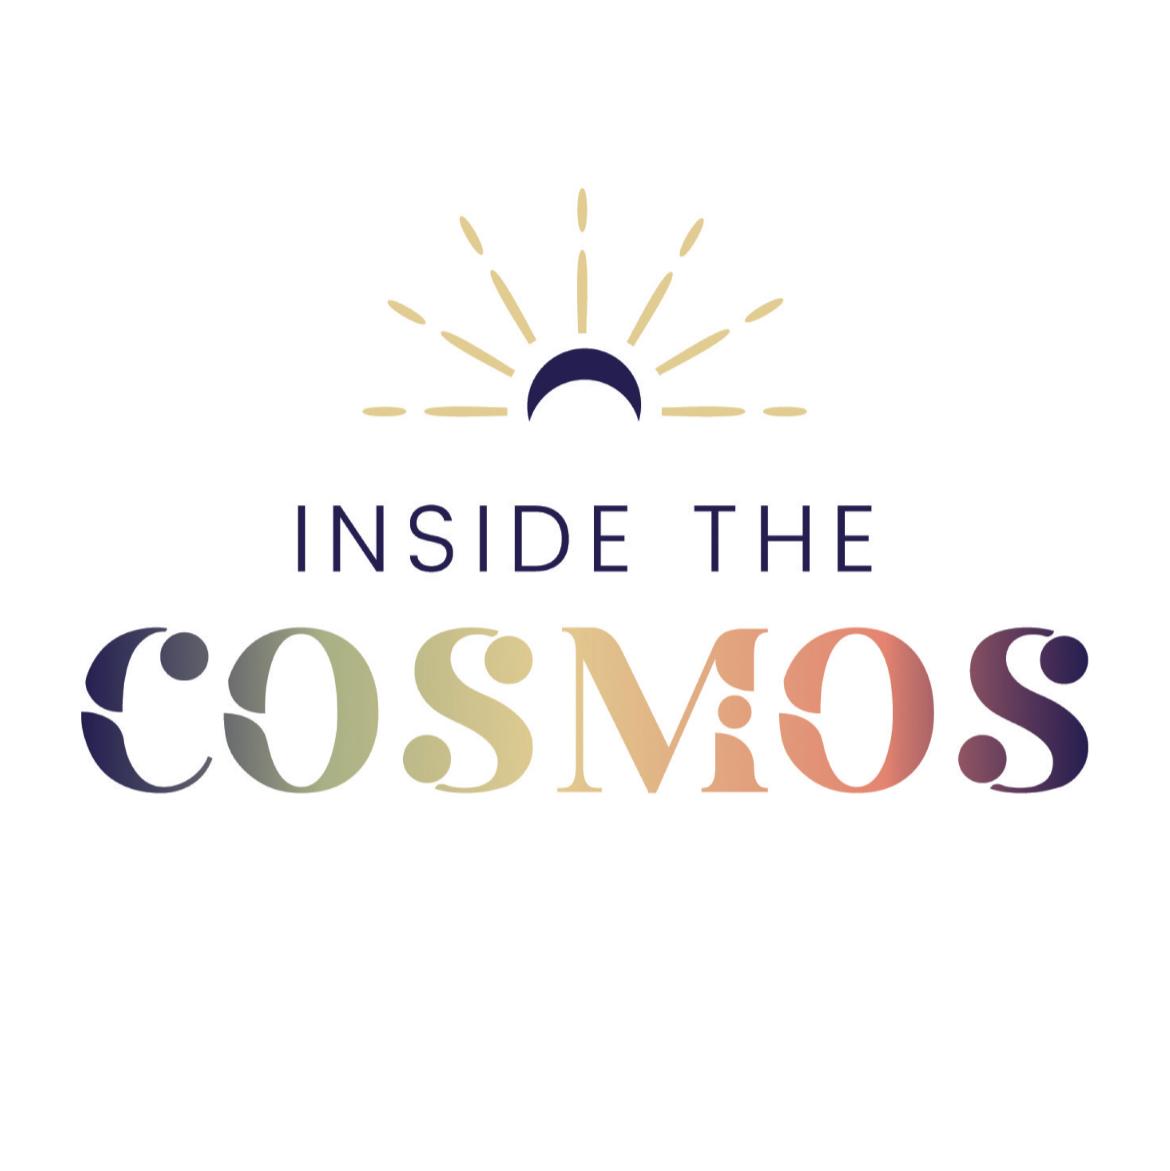 Insidethecosmos's images